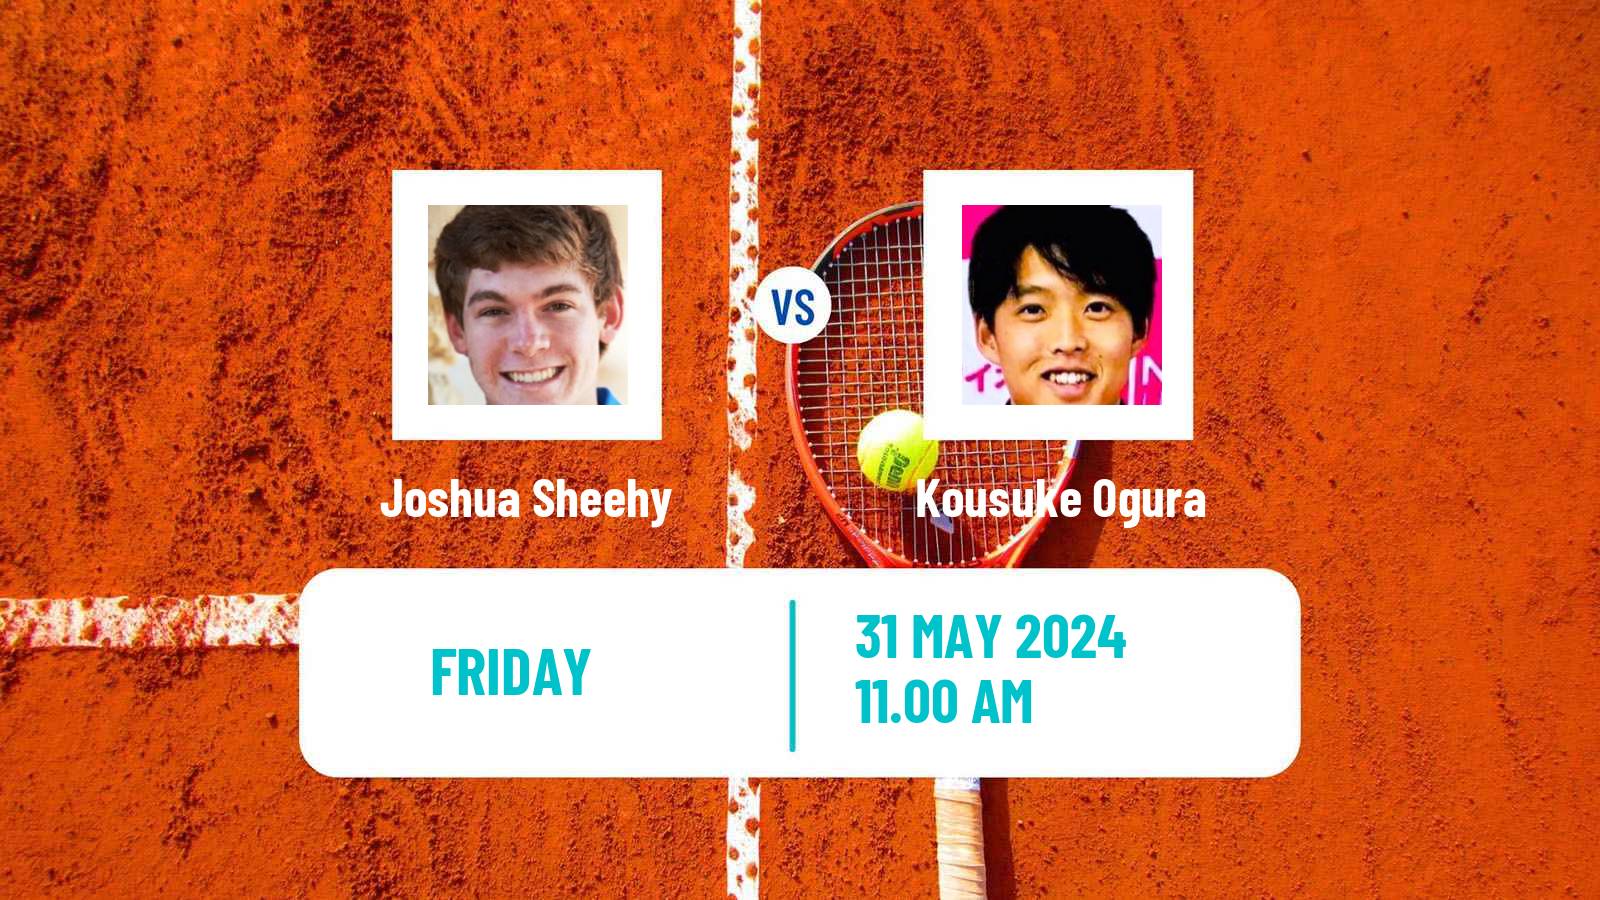 Tennis ITF M15 Kingston 3 Men Joshua Sheehy - Kousuke Ogura